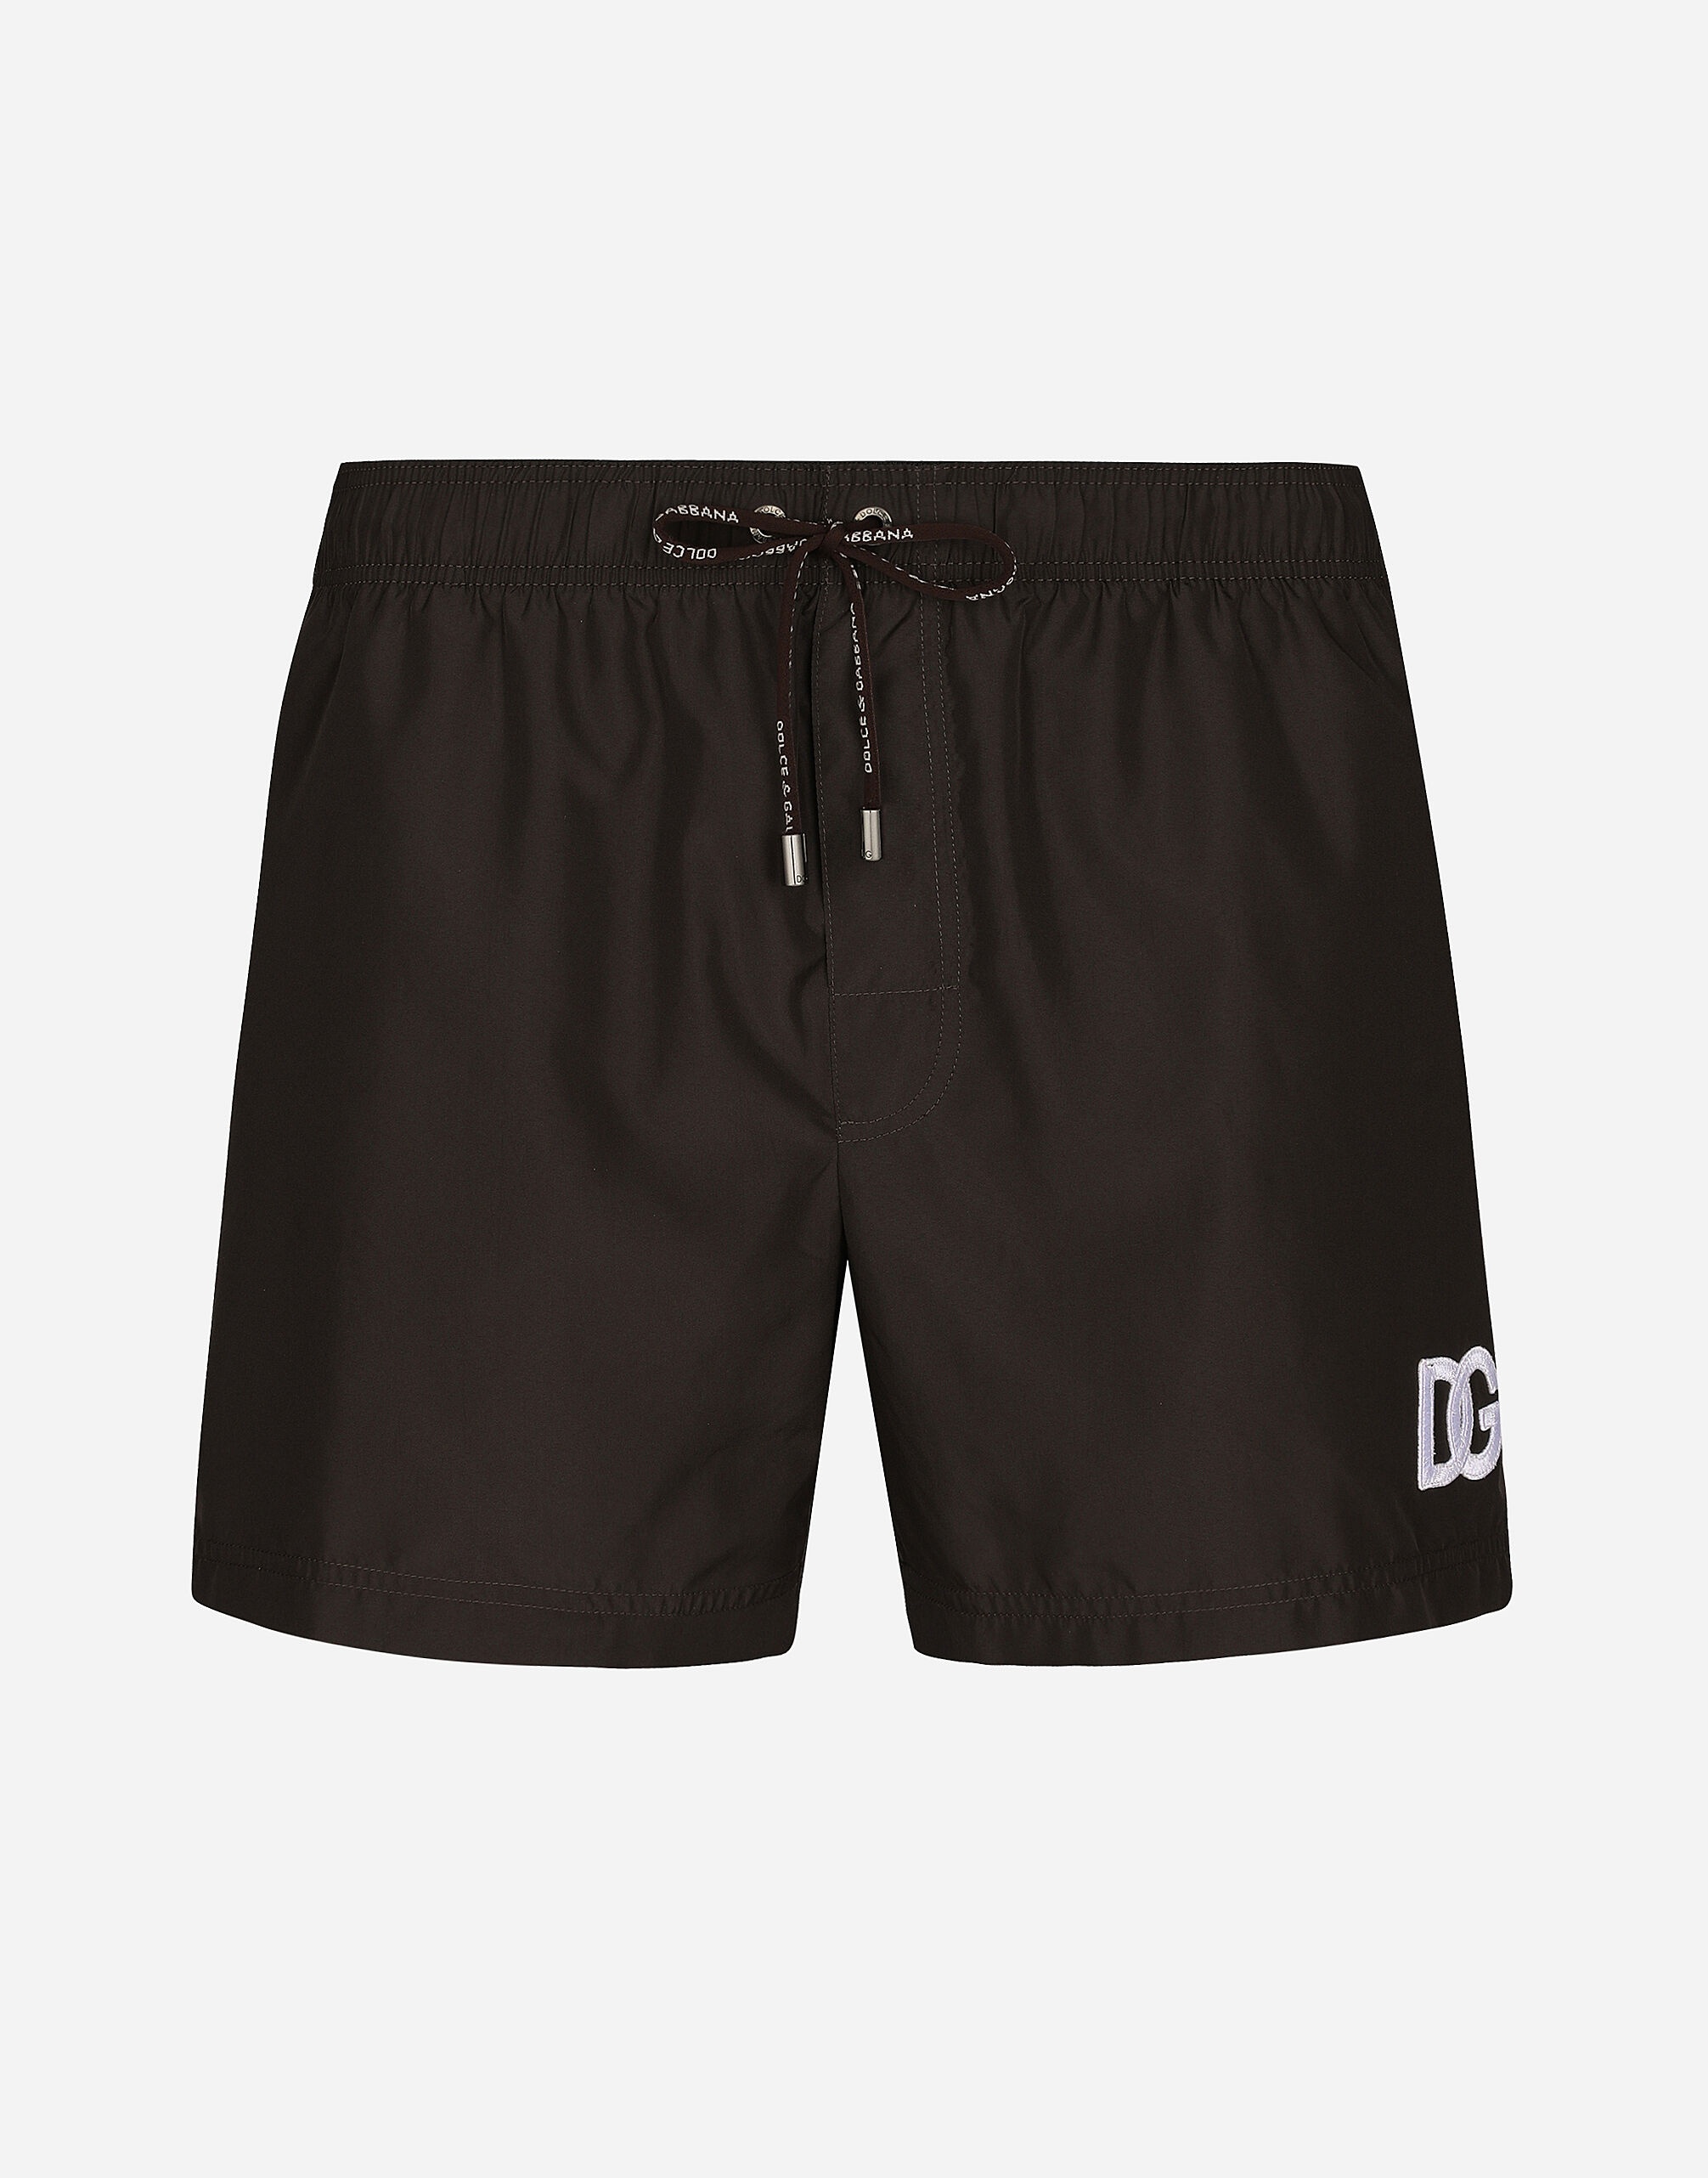 Short swim trunks with DG logo patch - 1